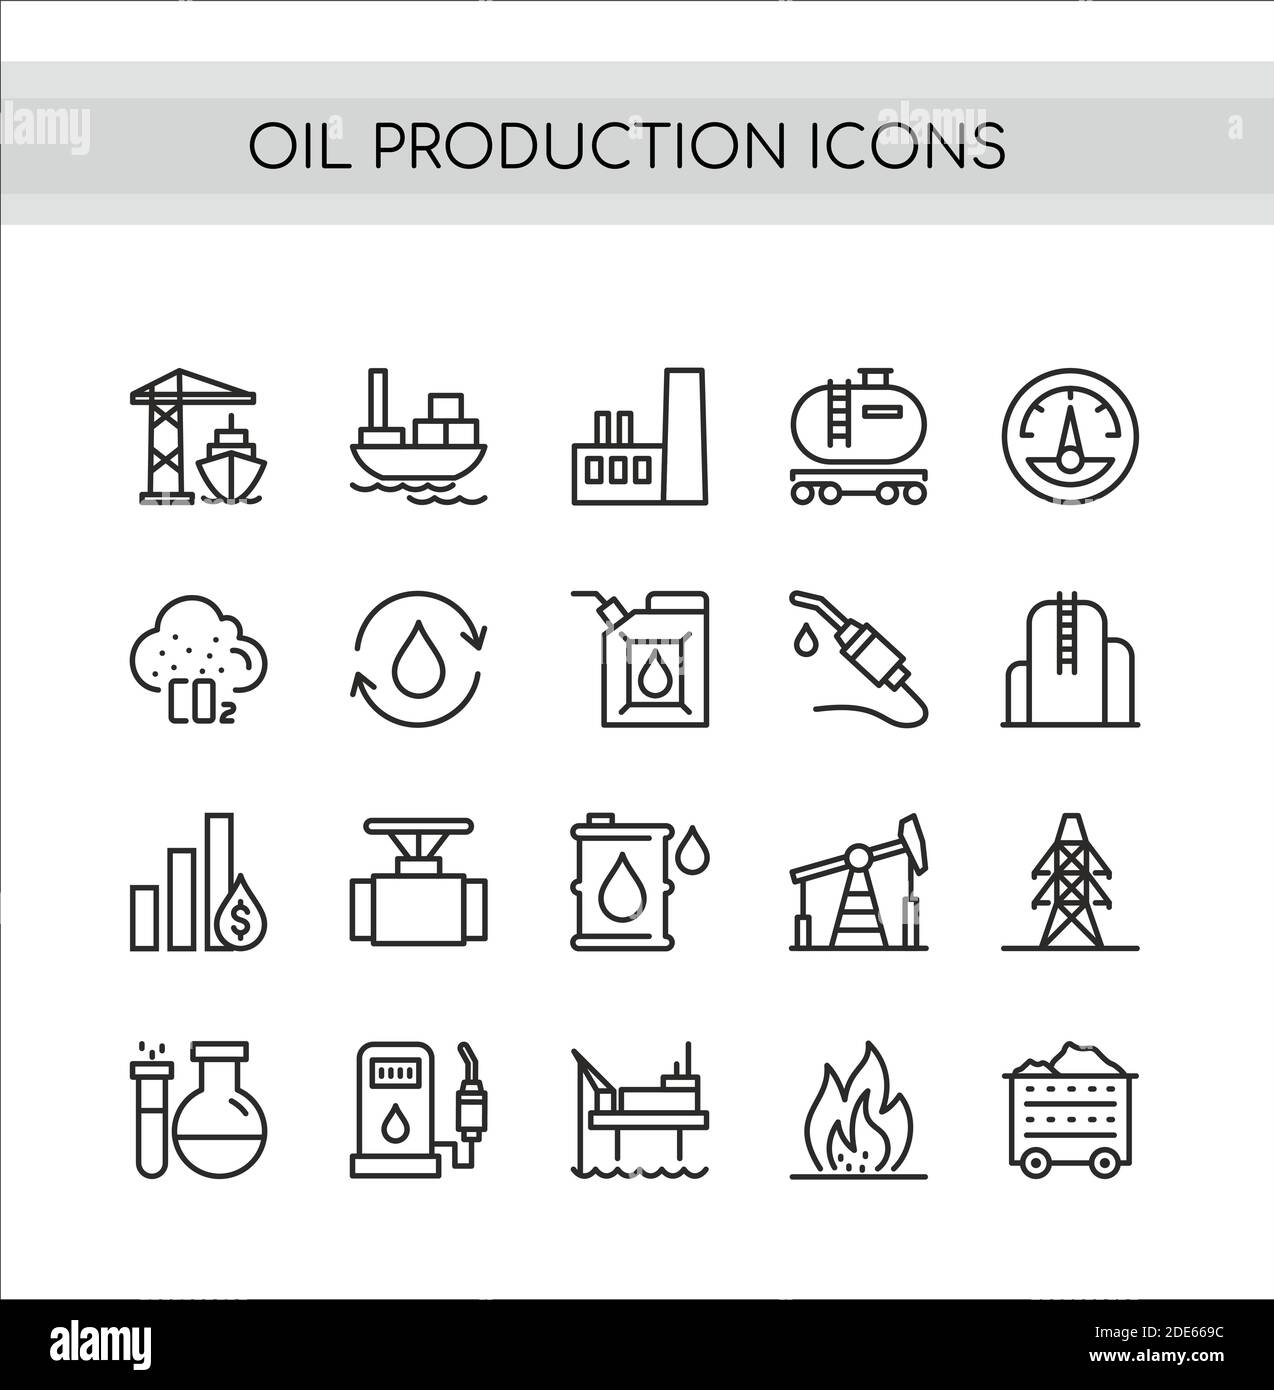 Oil production vector illustration set, oilfield drilling pump station, tanker ship or truck transportation, refinery oil plant symbols Stock Vector